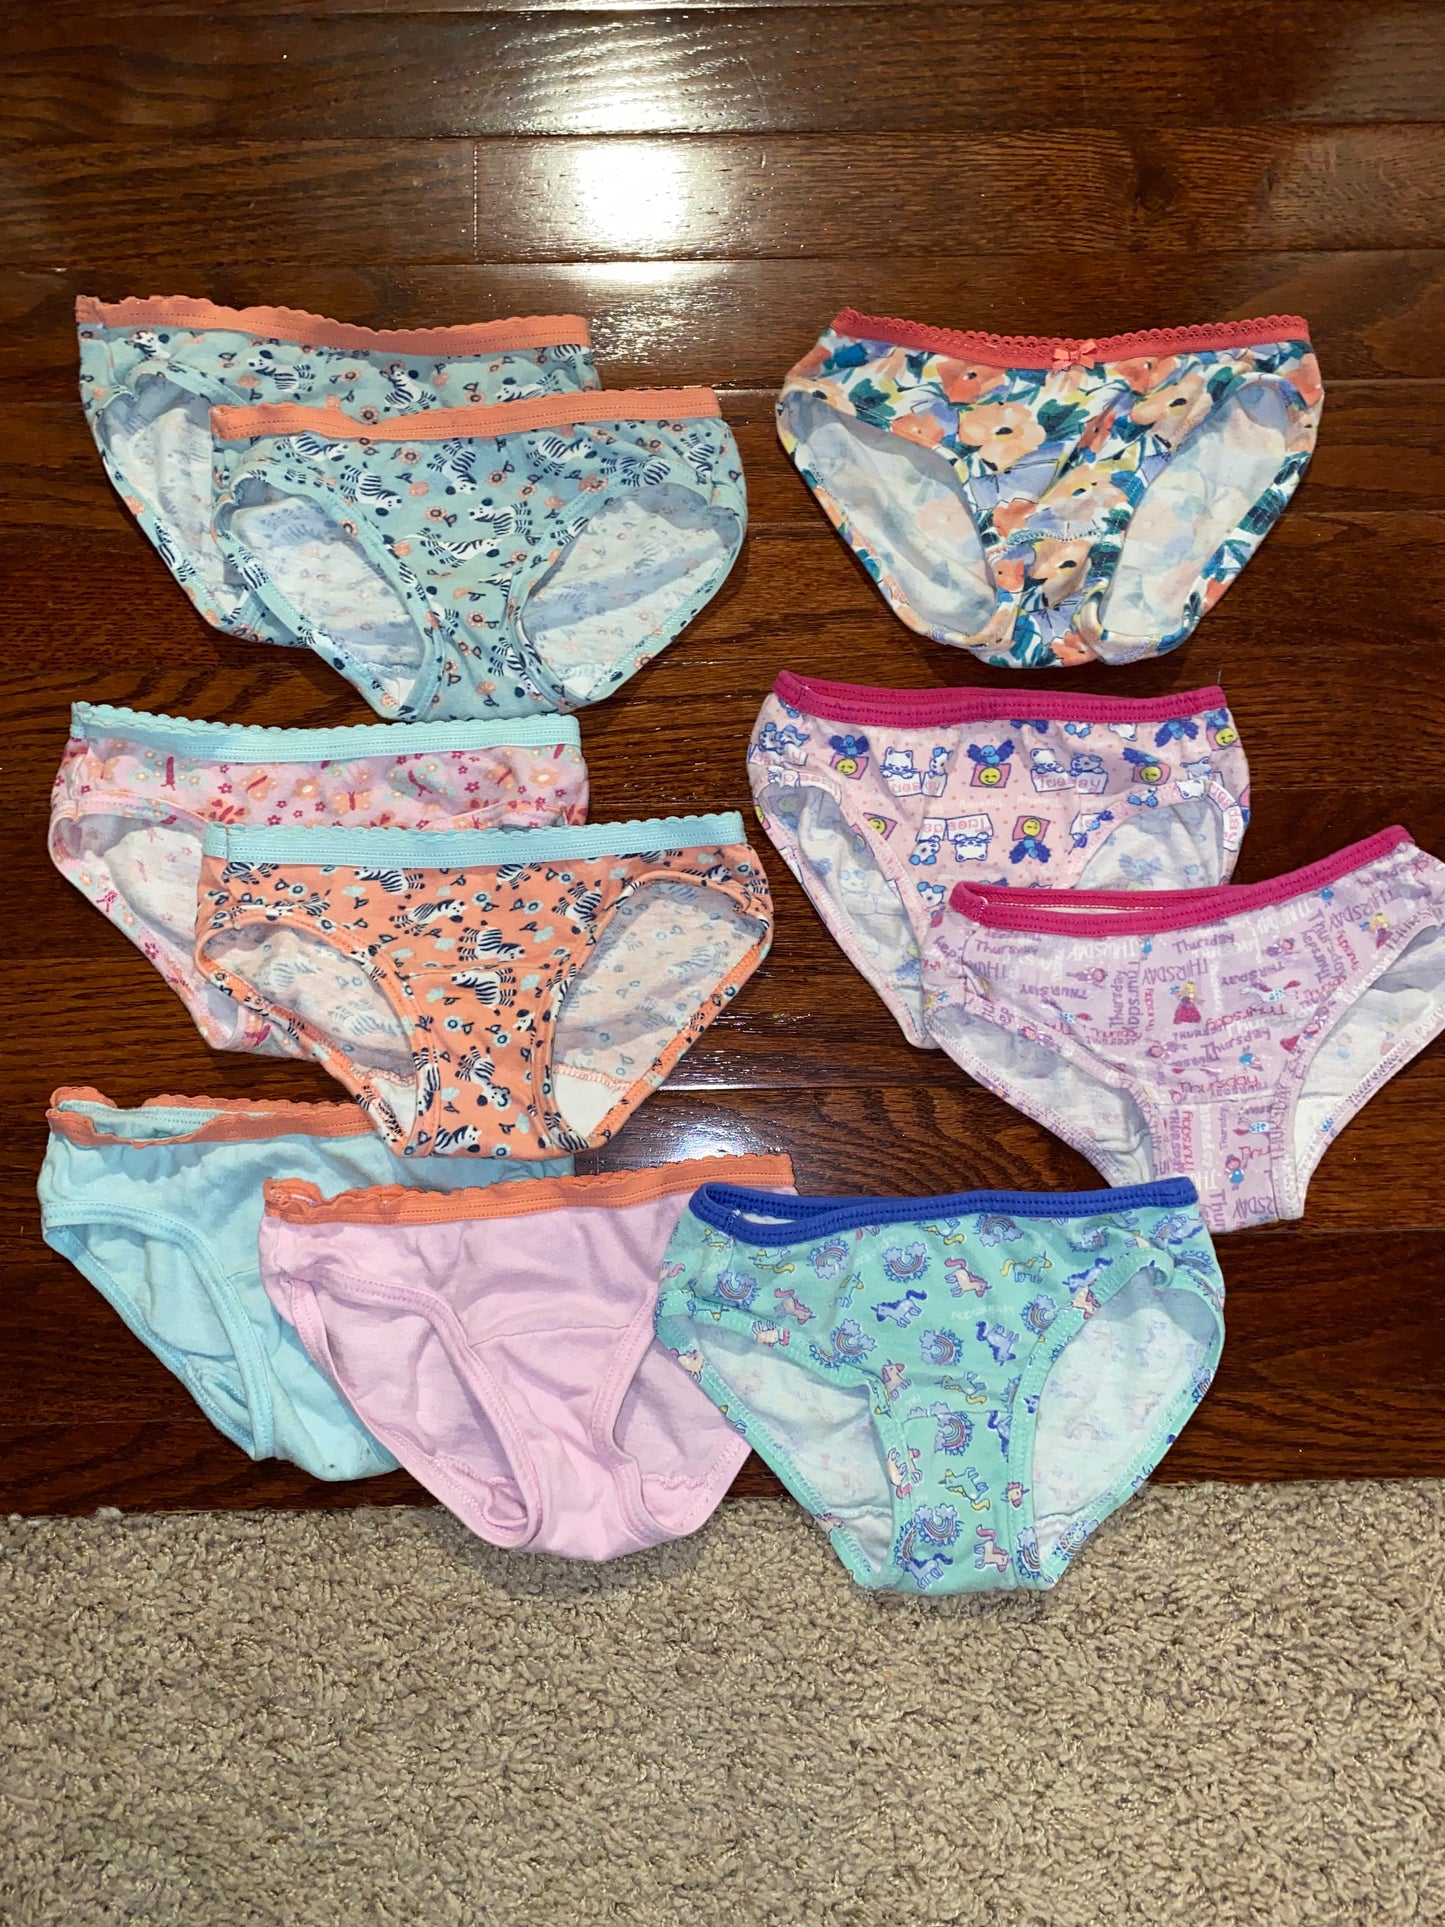 Girls 2T/3T undies 10 pairs